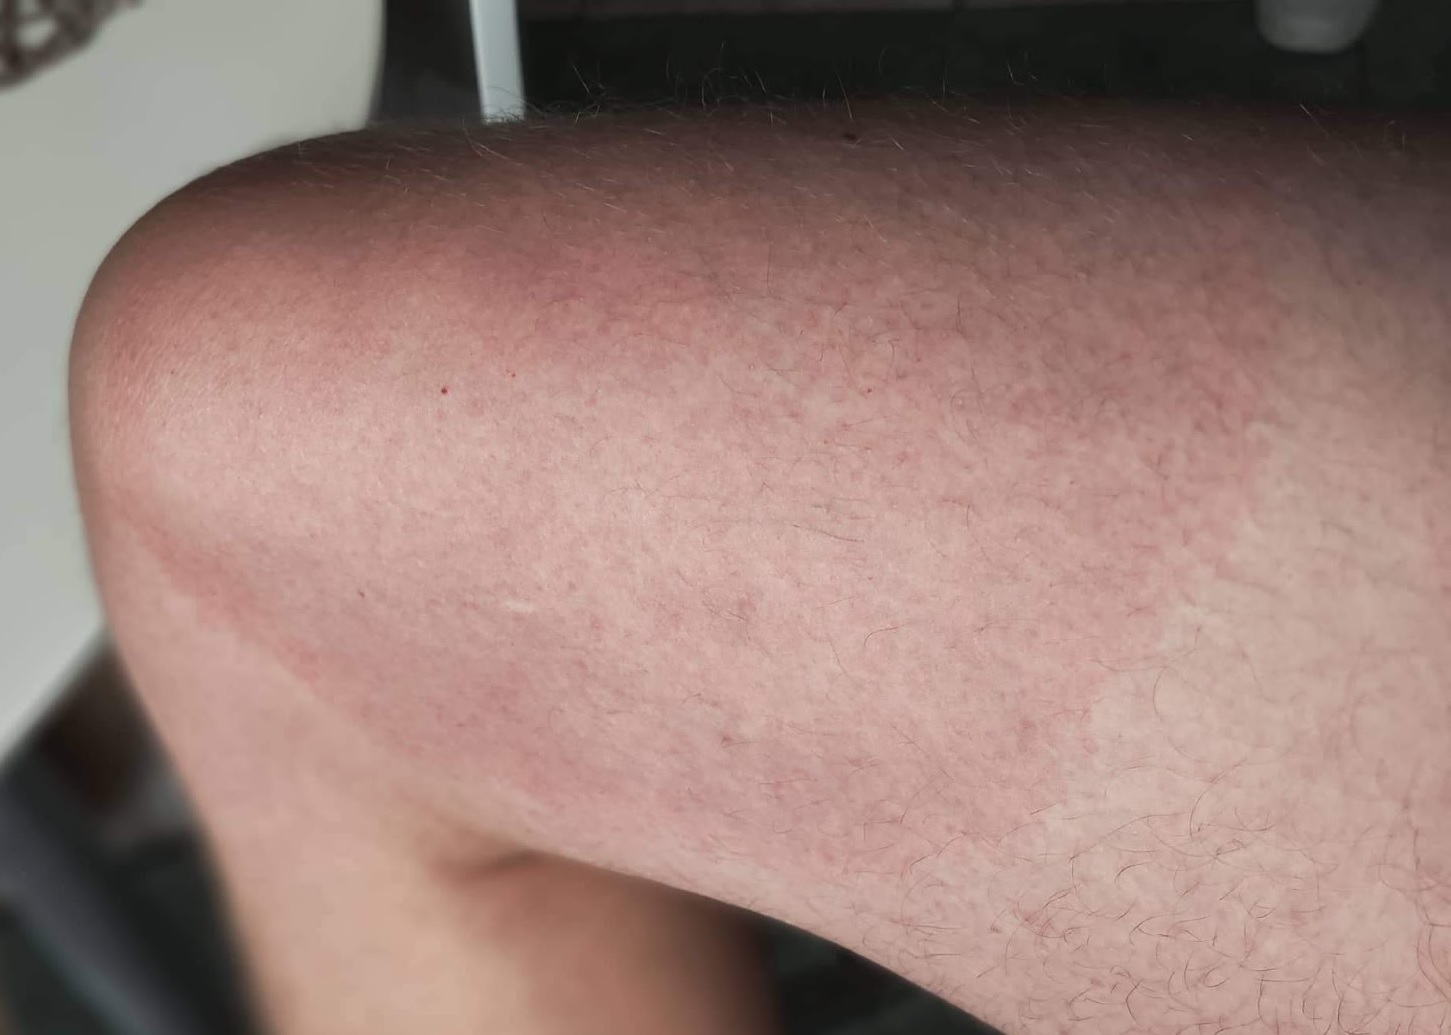 Lyme disease - on the leg